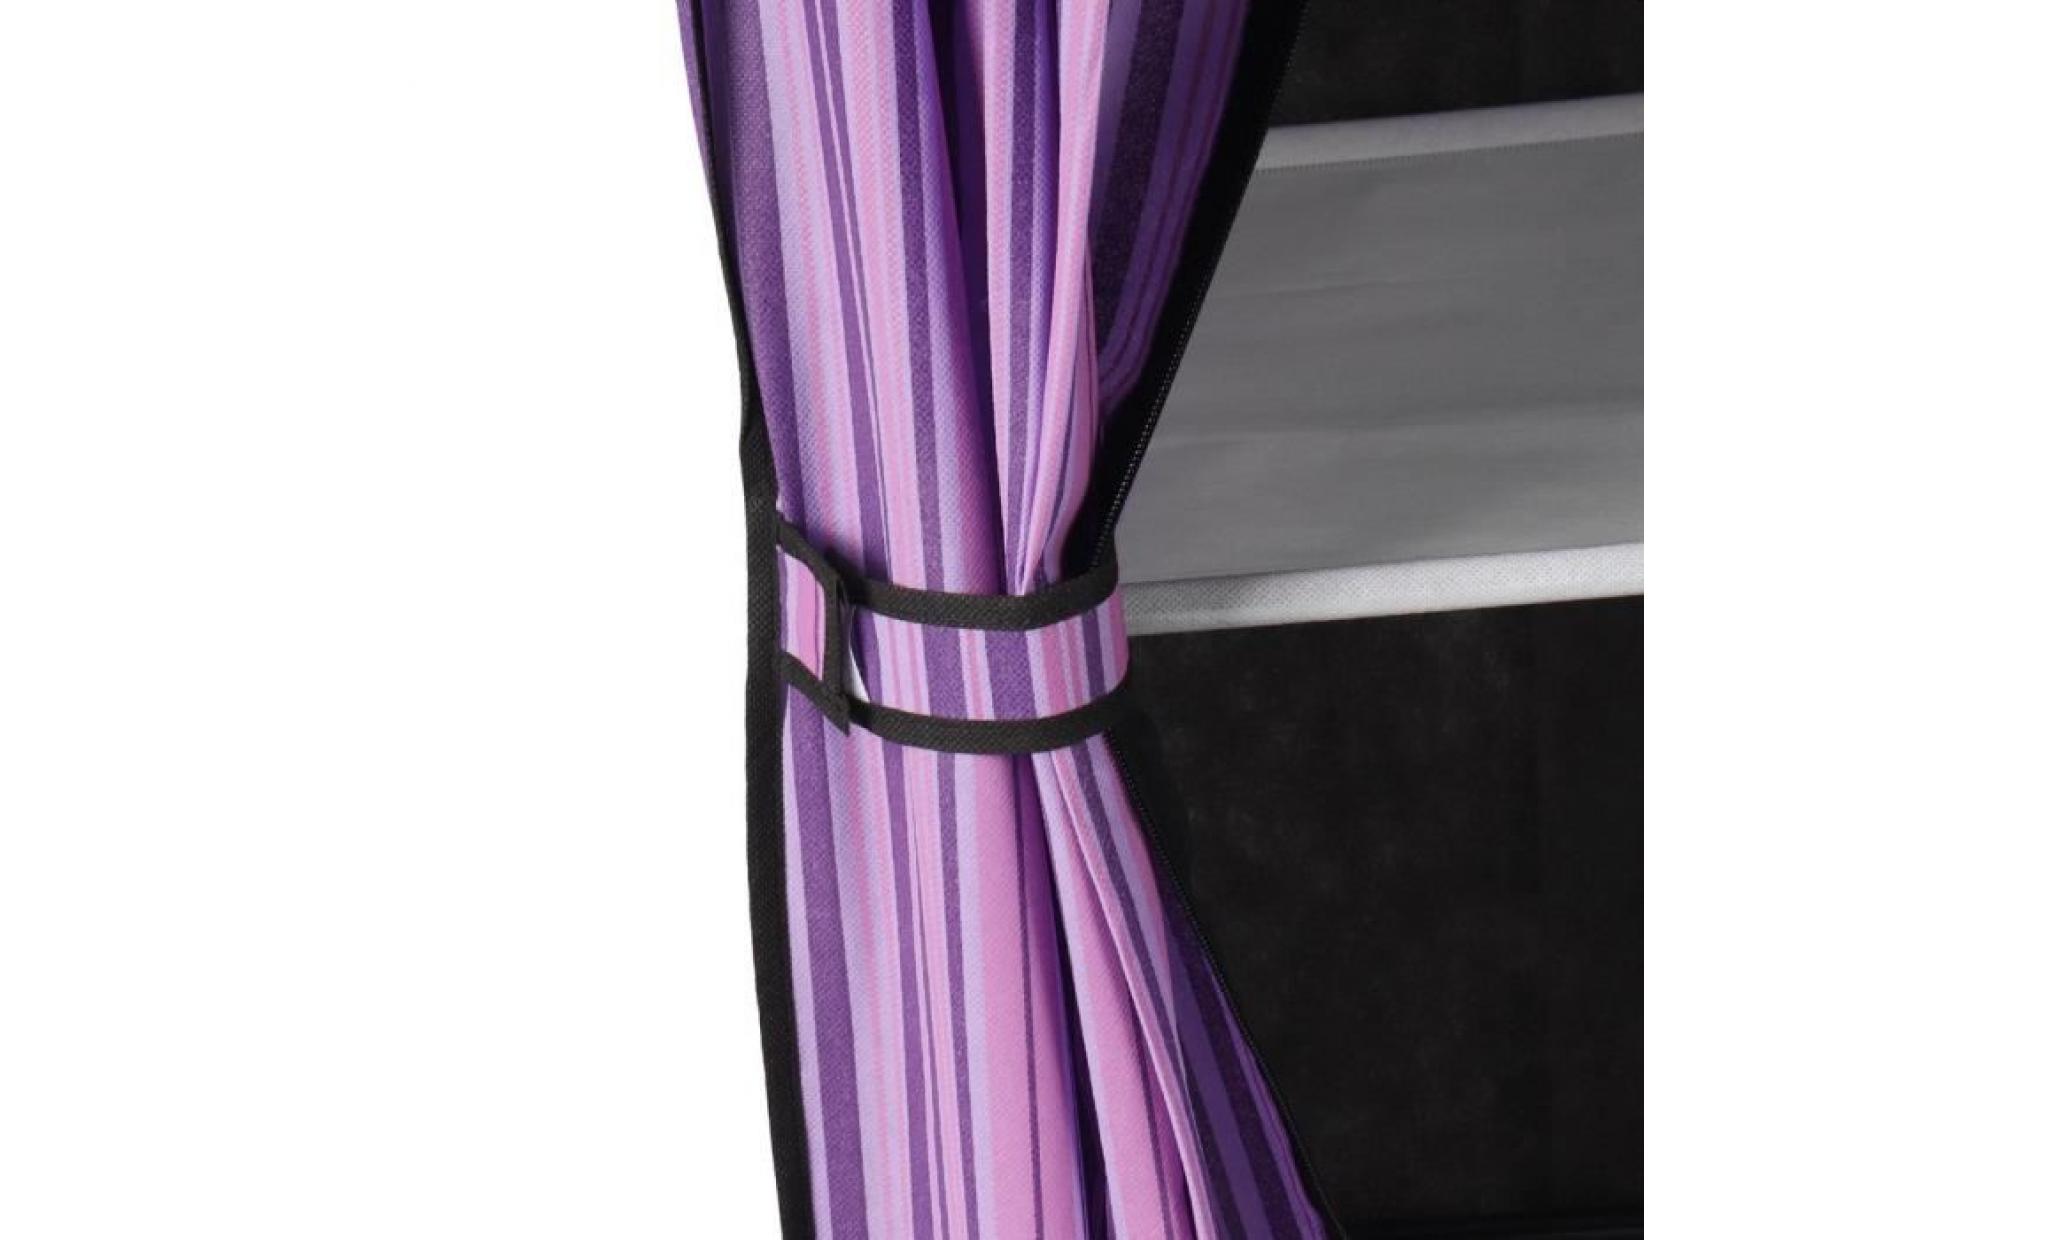 diy armoire violet sillon en tissu pliante étagères 68+70 pas cher